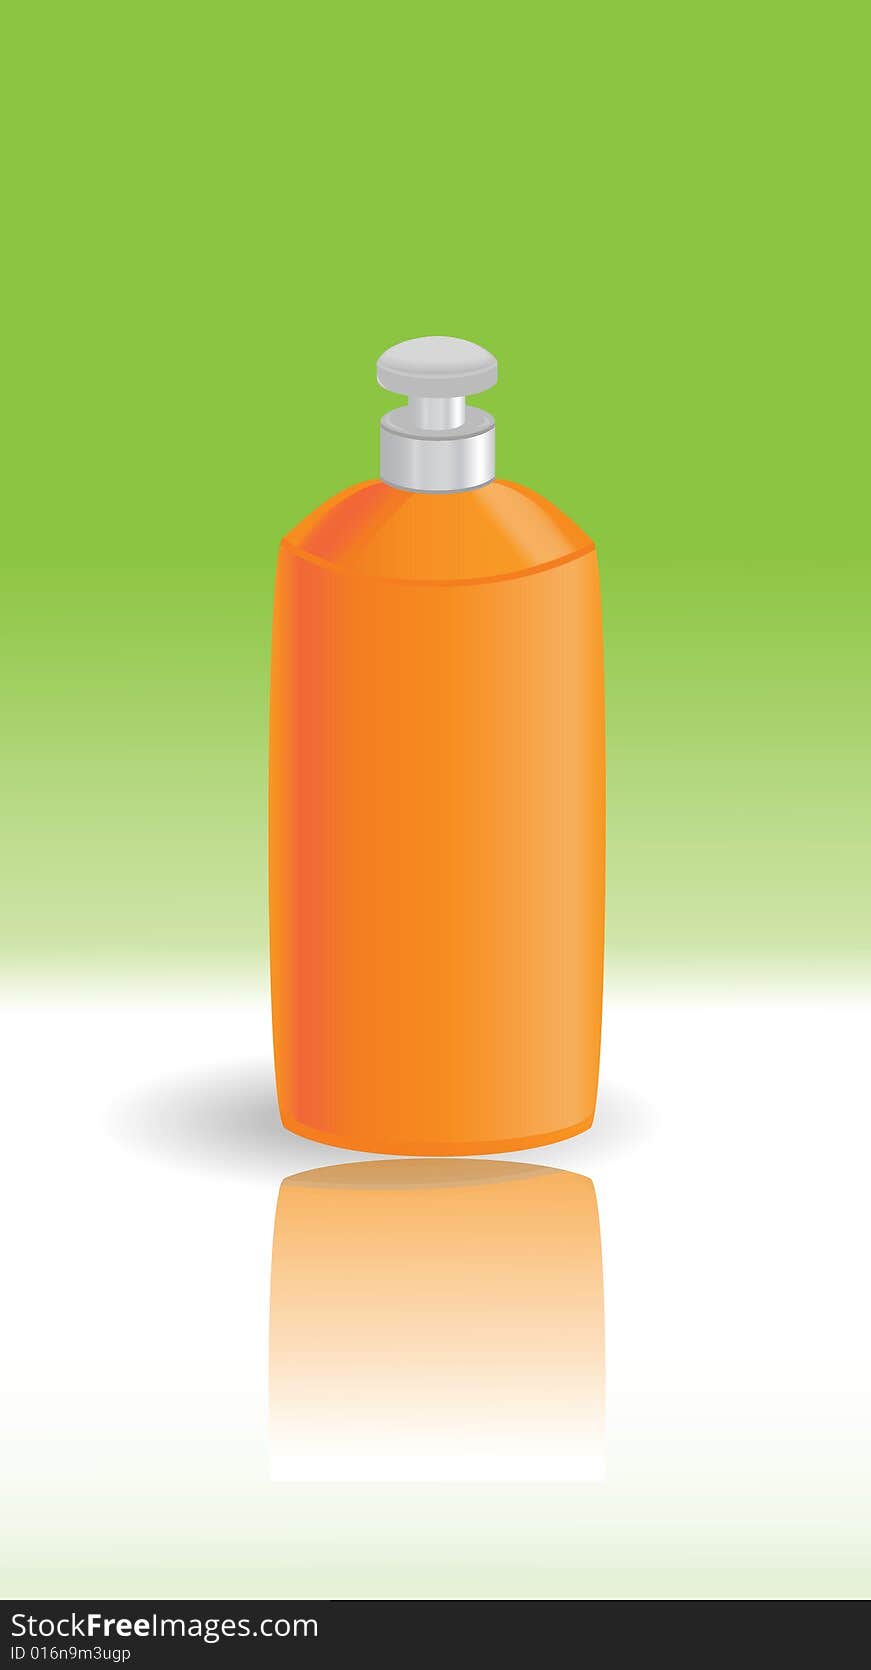 Vector illustration of one bottle under a liquid on a green background. Vector illustration of one bottle under a liquid on a green background